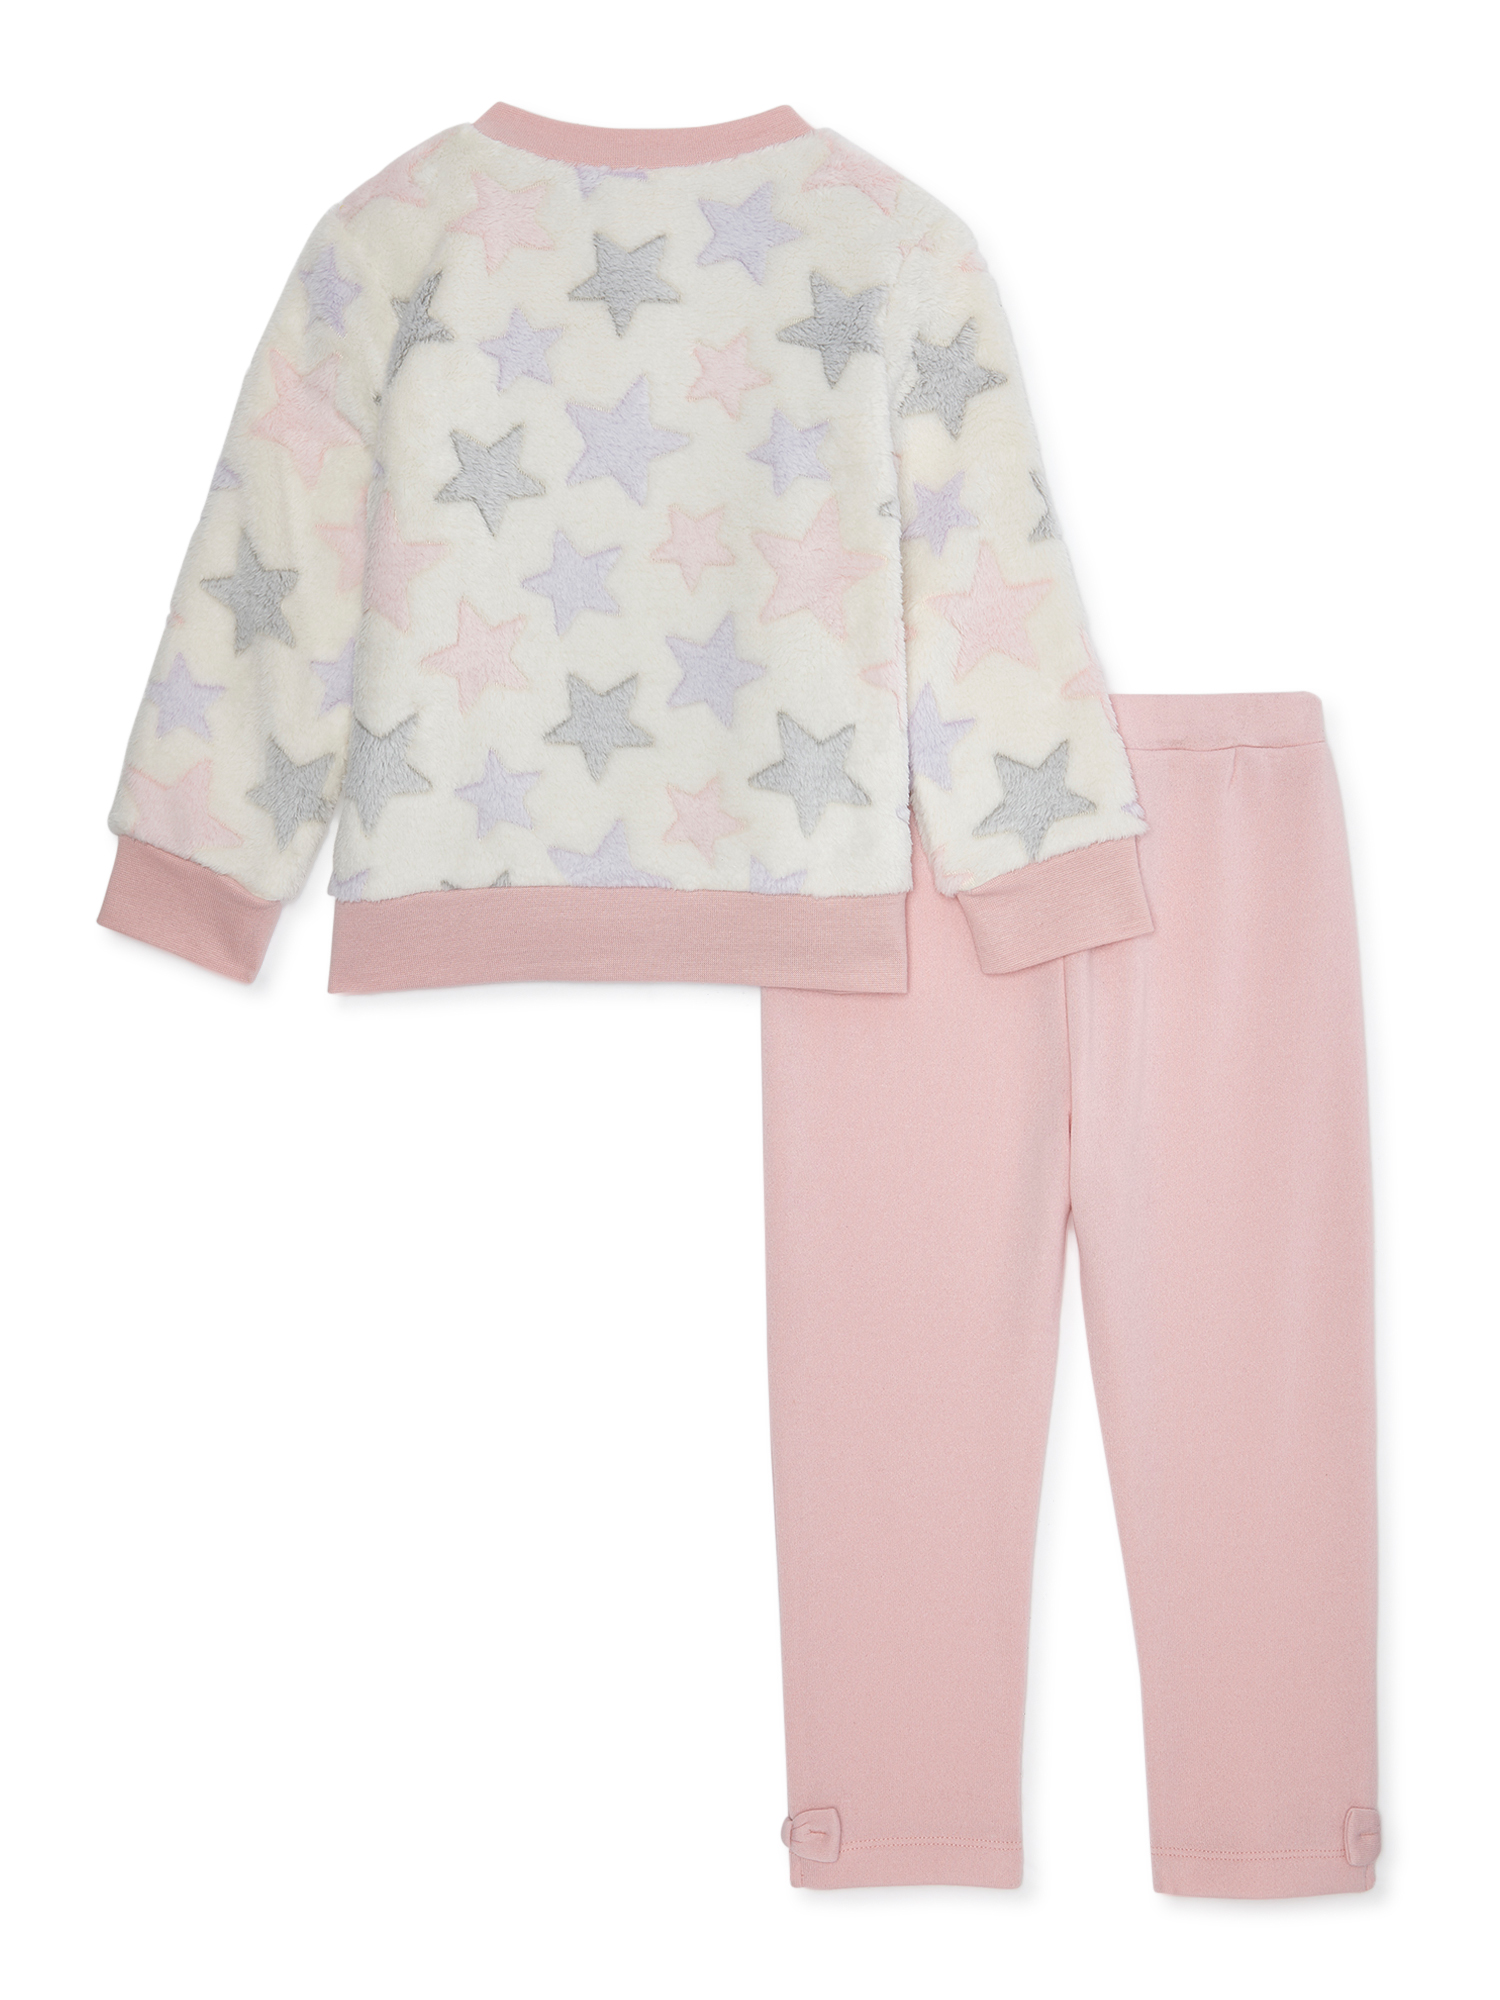 Wonder Nation Toddler Girl Minky Jacket, T-shirt & Pants, 3pc Outfit Set (2T-5T) - image 4 of 5